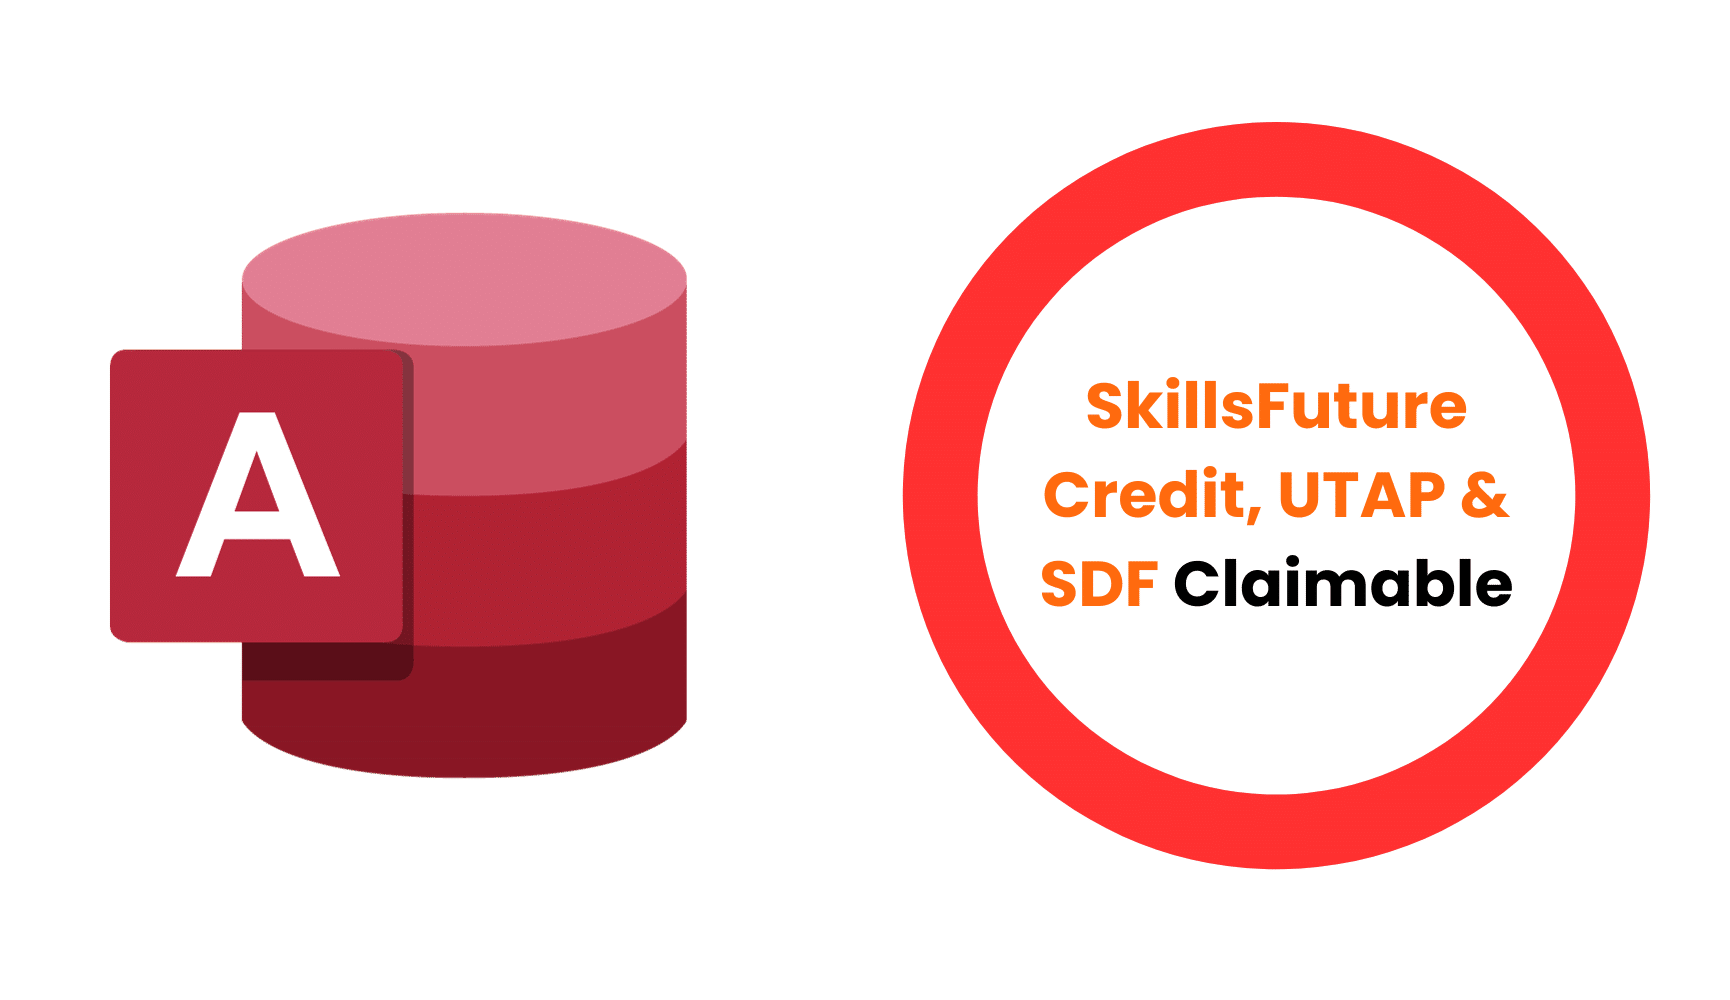 Microsoft Access Courses Singapore - SkillsFuture Credit, UTAP & SDF Claimable